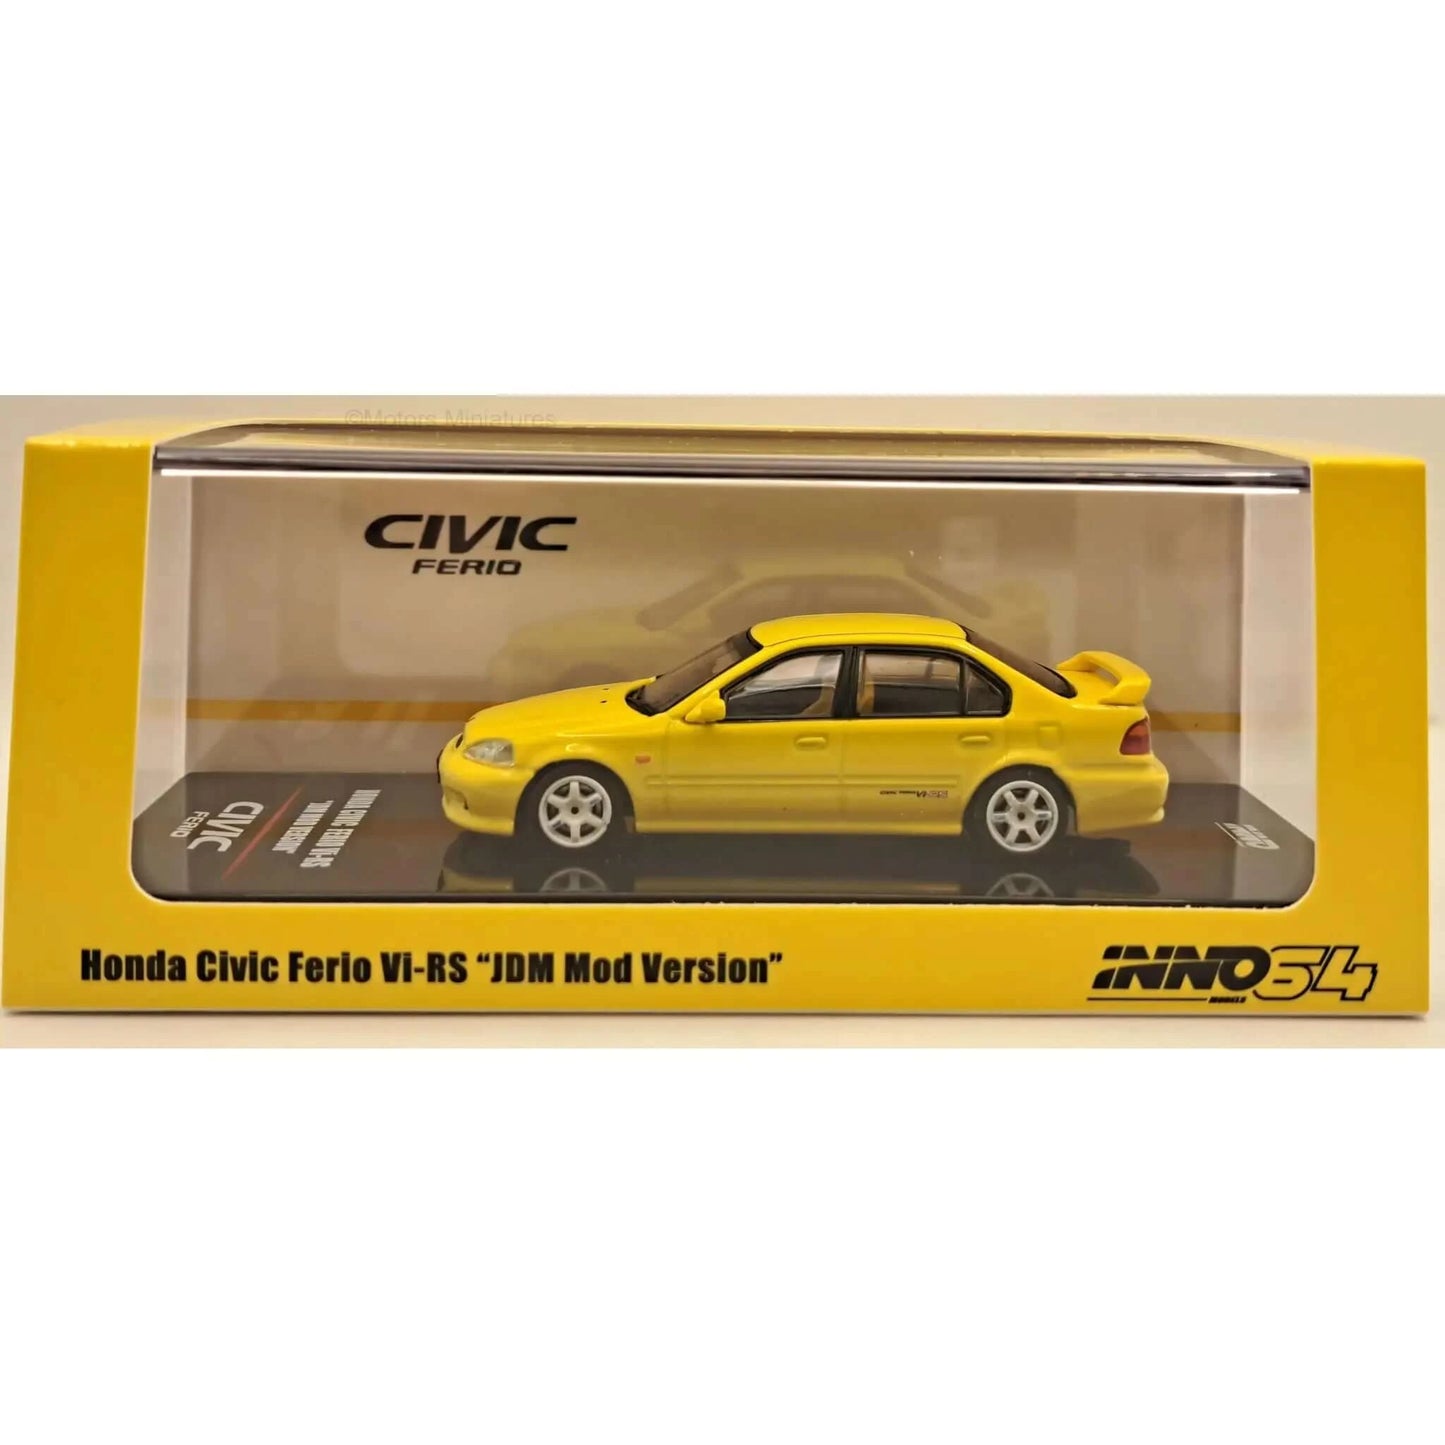 Honda Civic Ferio Vi-RS 1995 JDM Mod Version phoenix yellow Inno64 1/64 | Motors Miniatures